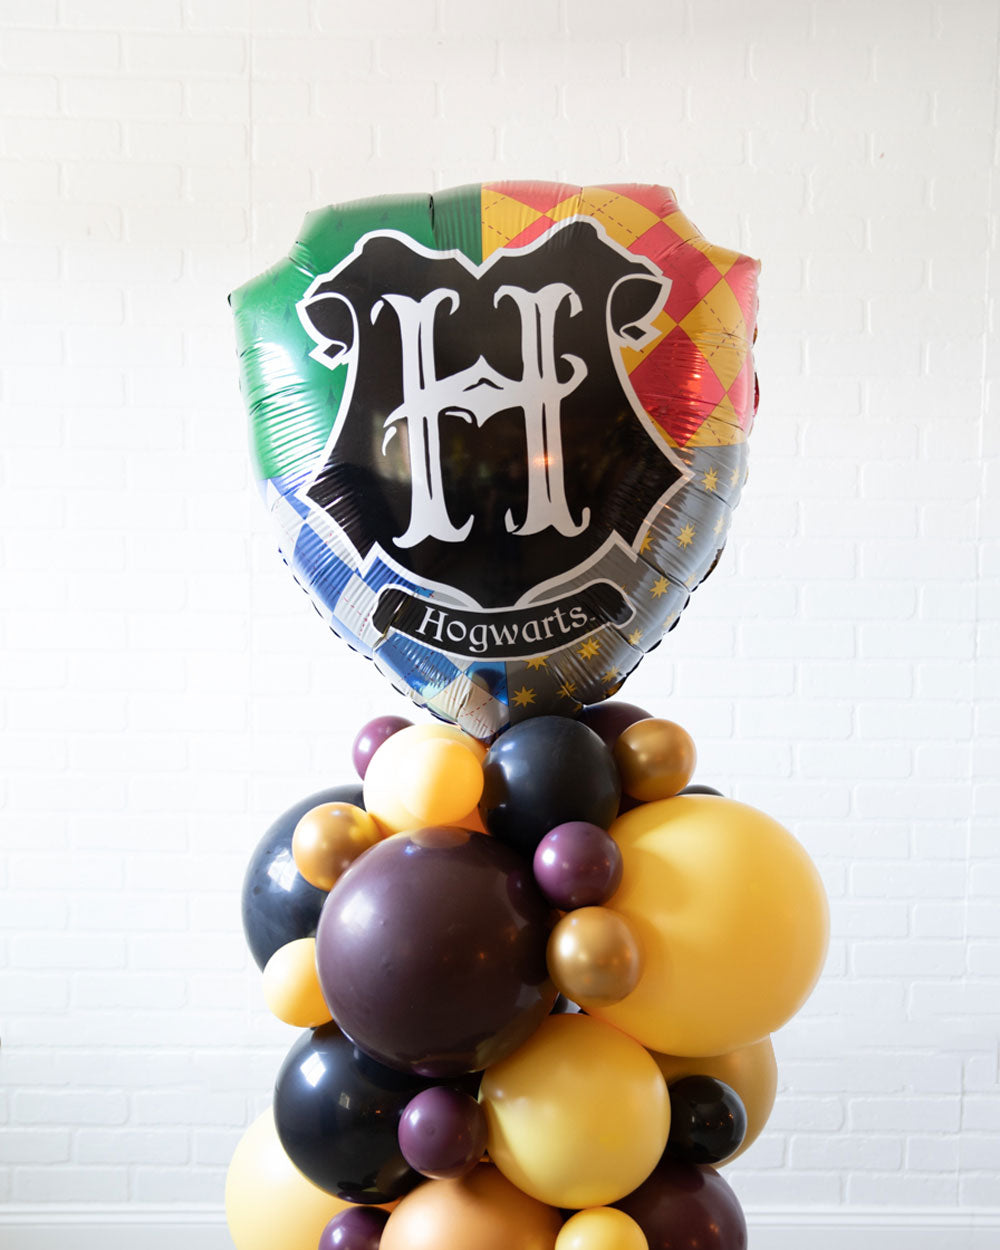 Harry Potter balloon arrangement 4ft